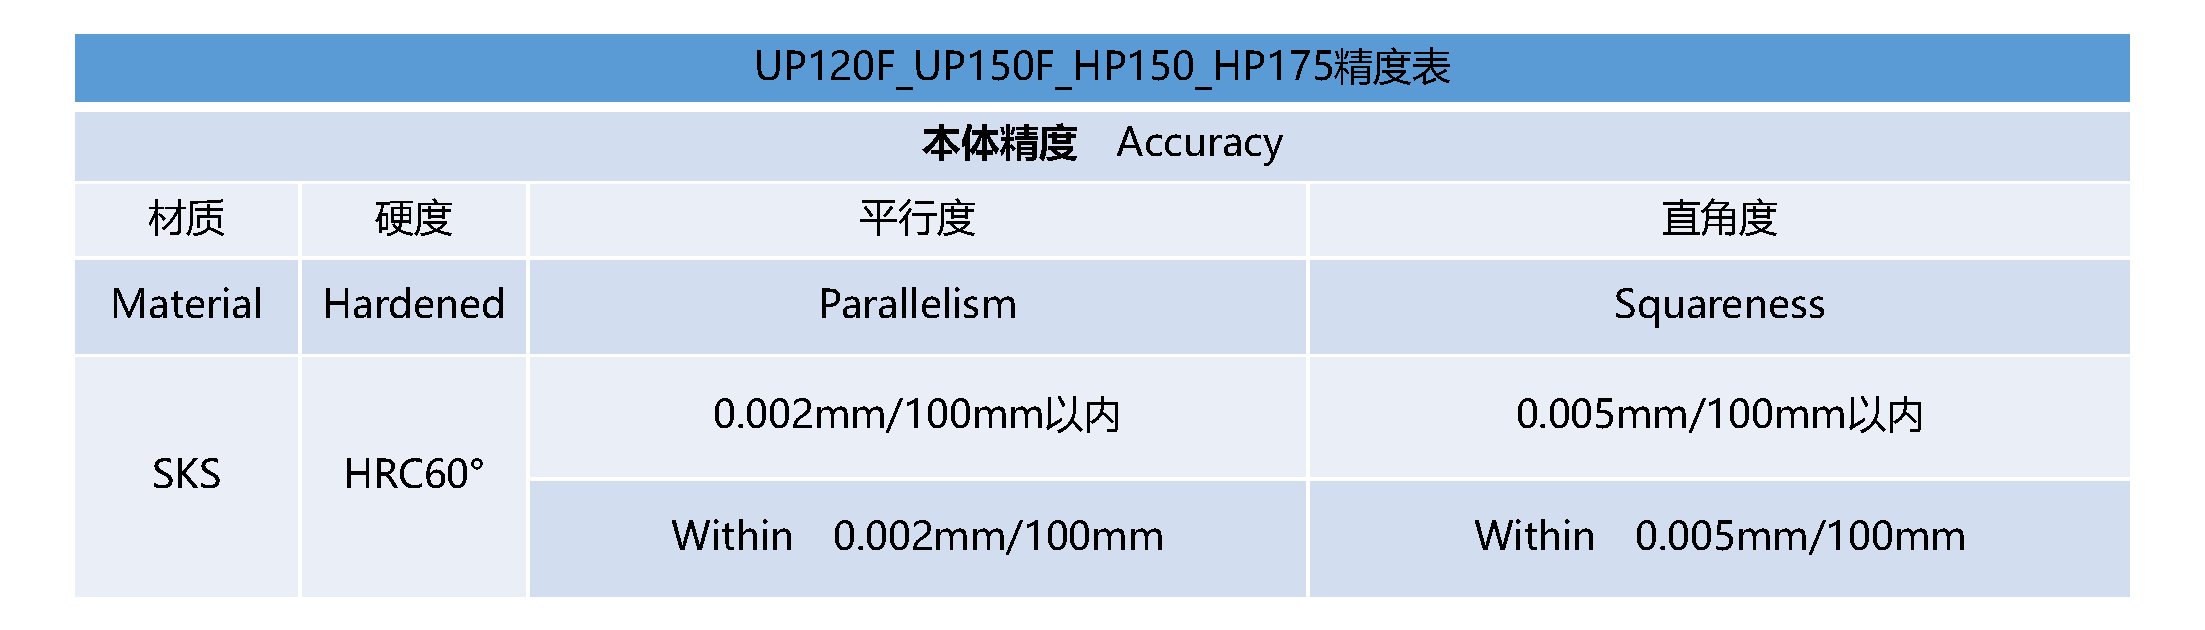 UP120F_UP150F_HP150_HP175_精度表- 中文.png